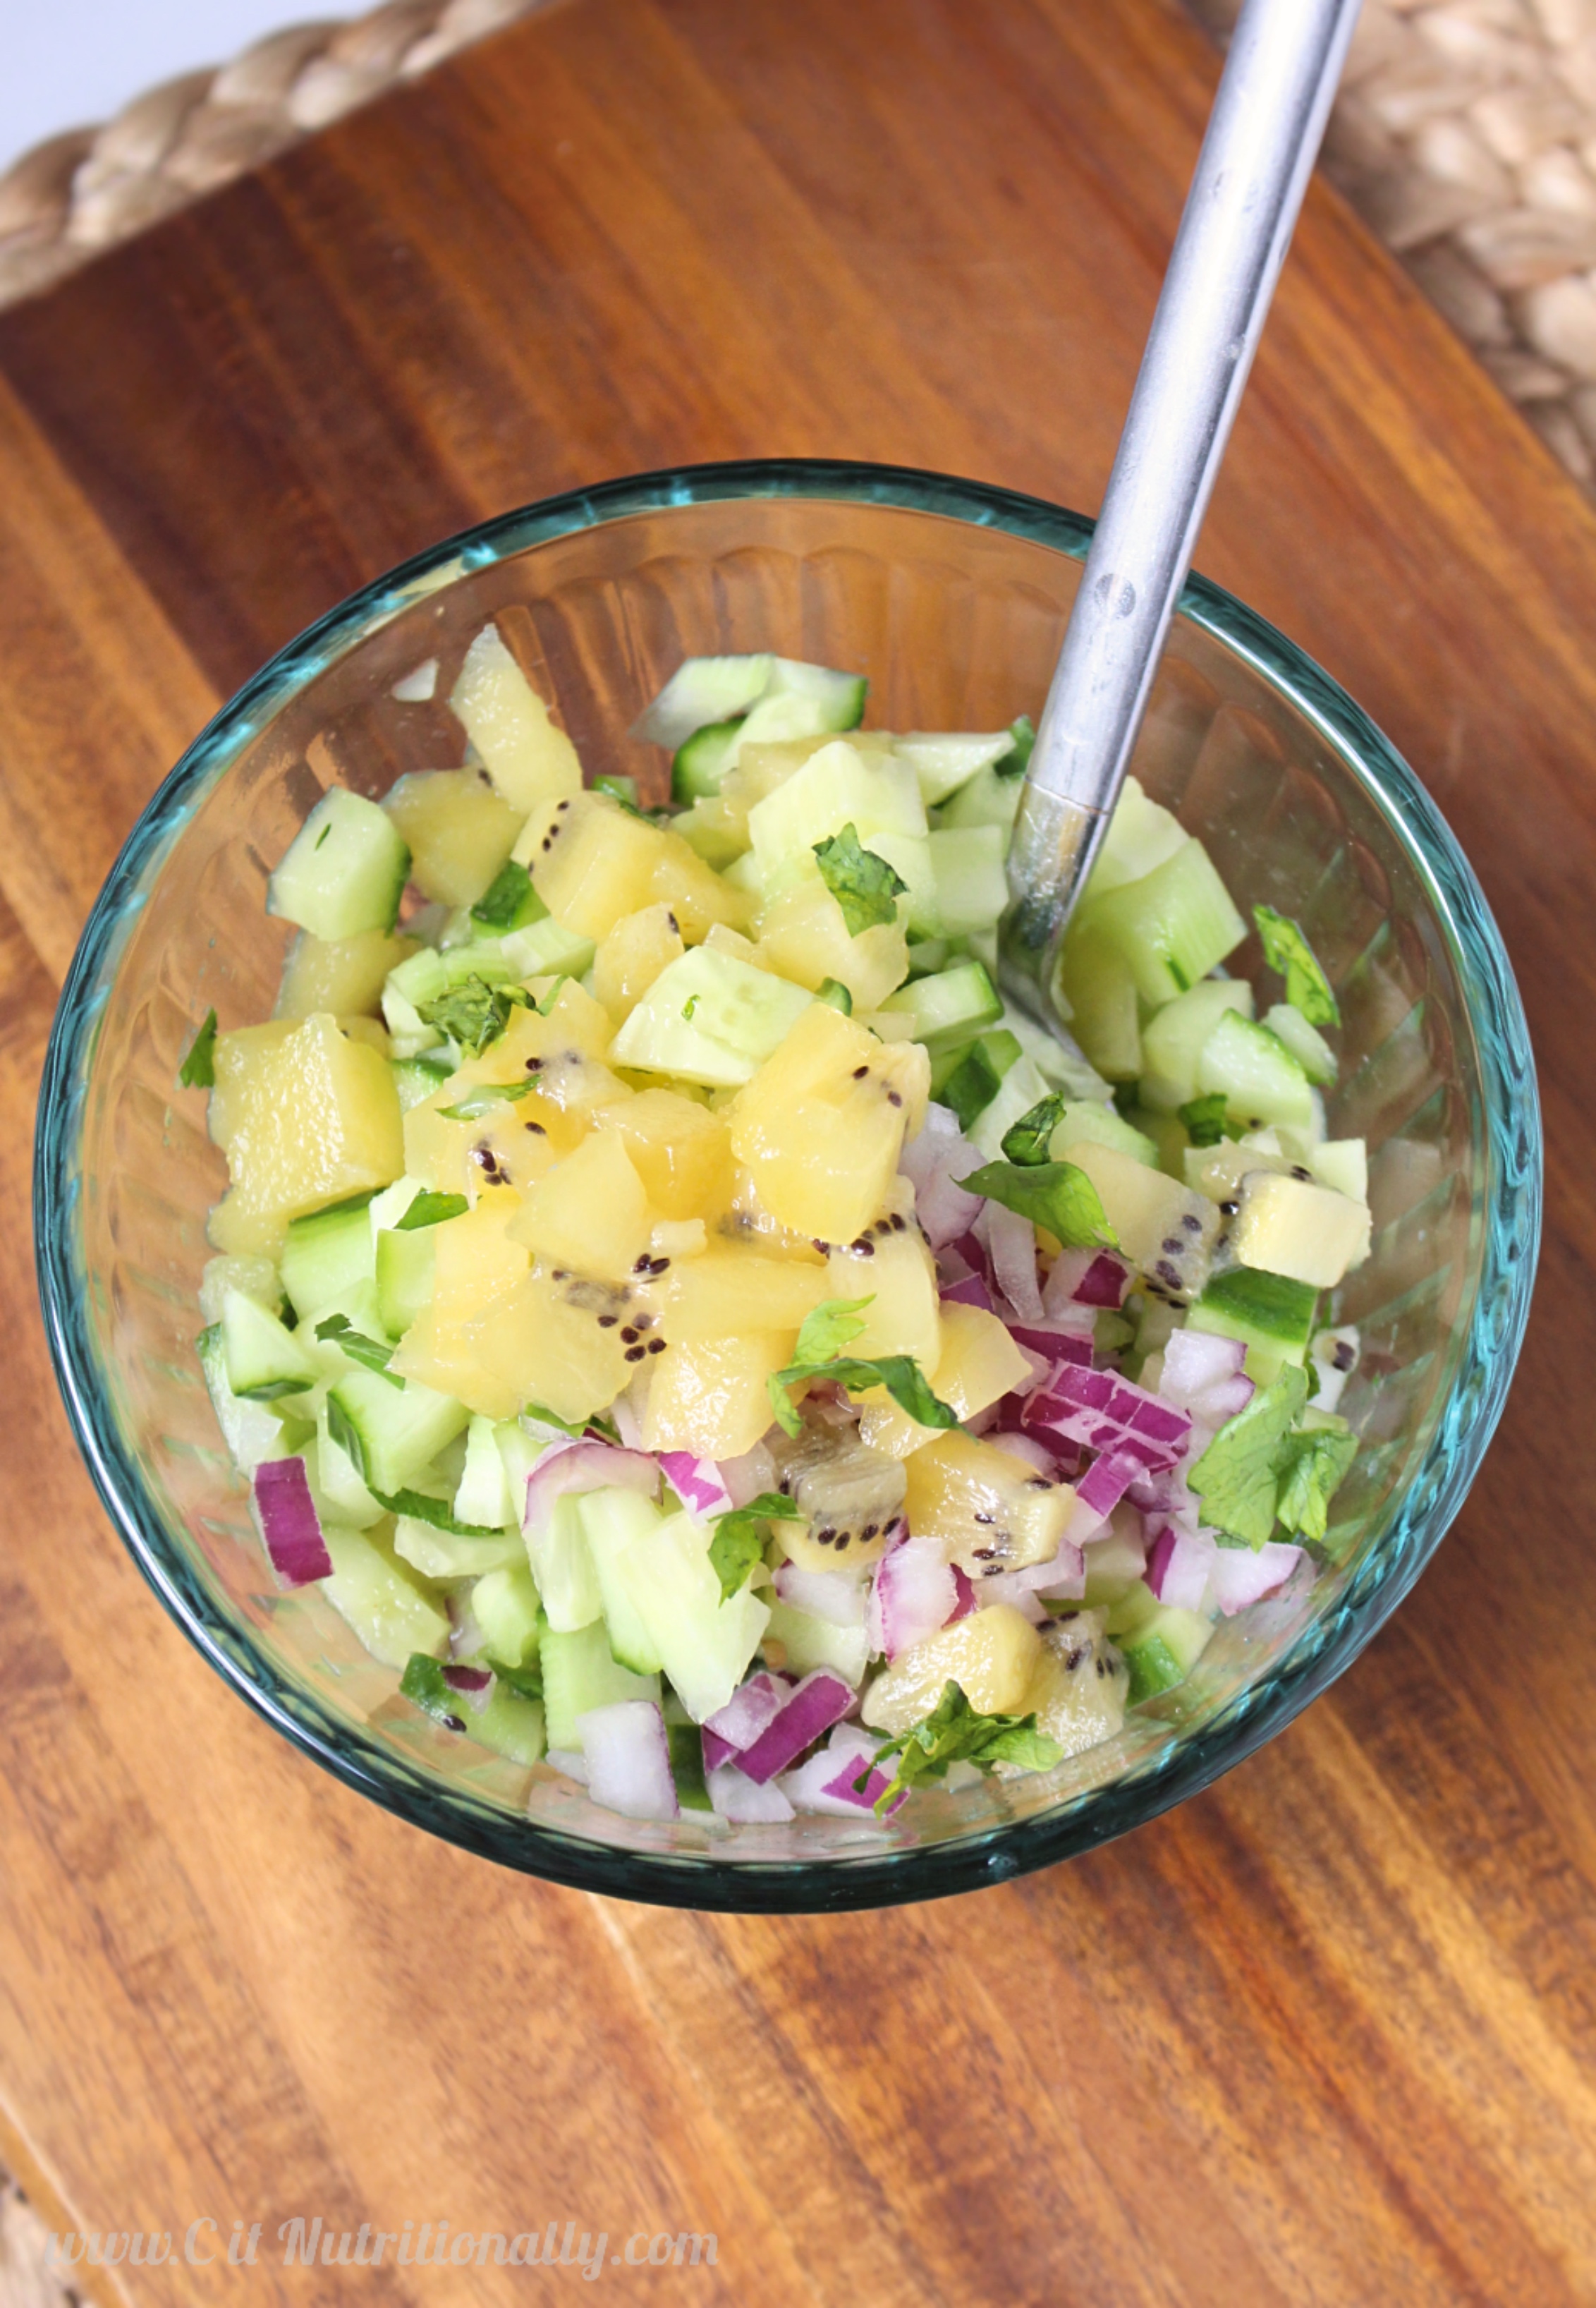 Kiwi Cucumber Salsa | C it Nutritionally